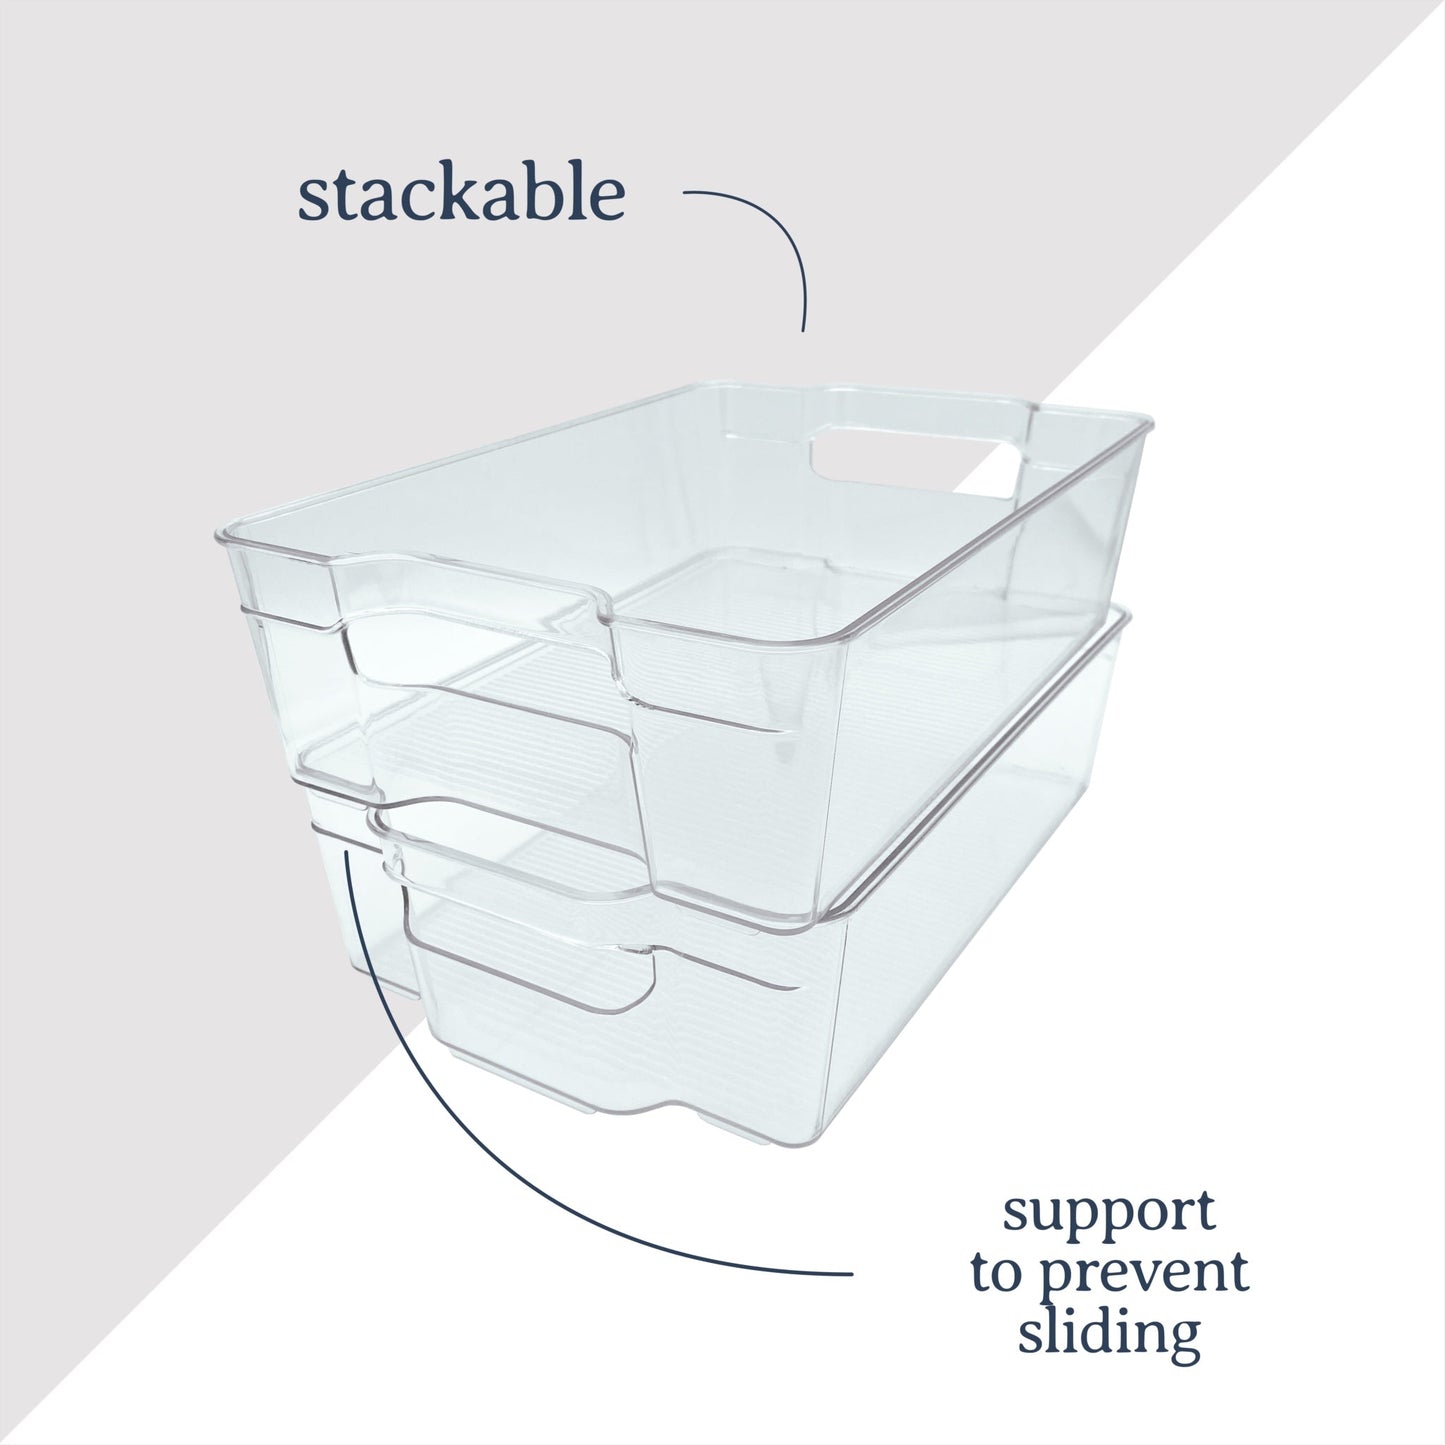 Fridge Organiser (Medium) - Household Storage Containers - The Organisy